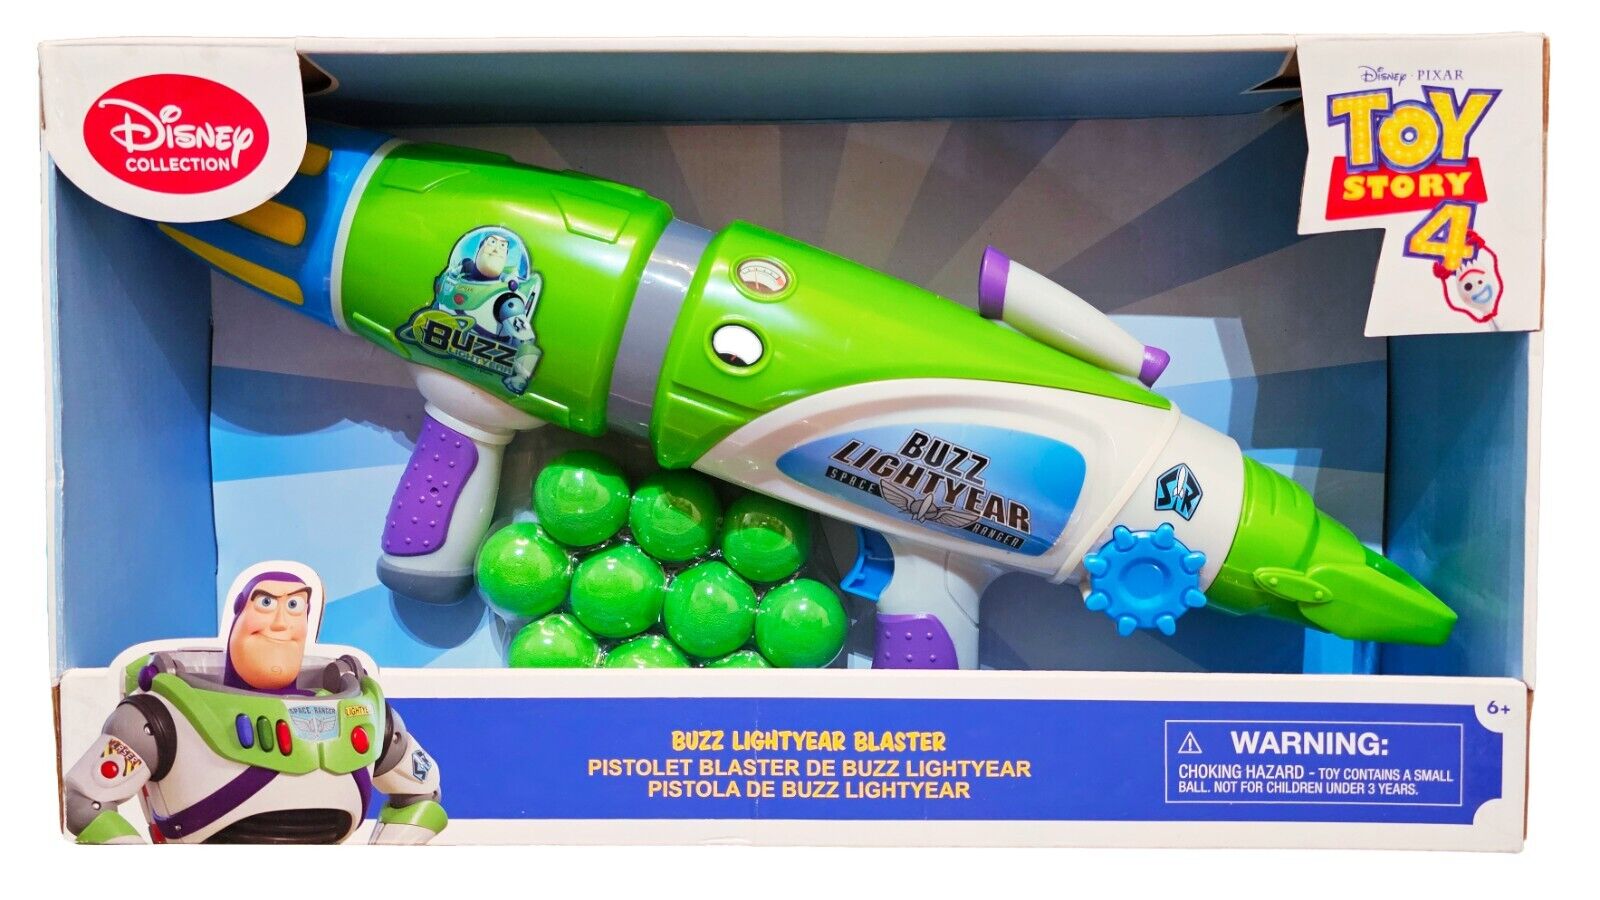 Toy Story Buzz Lightyear Toy Ball Blaster Gun Disney Collection Pixar Nerf Gun